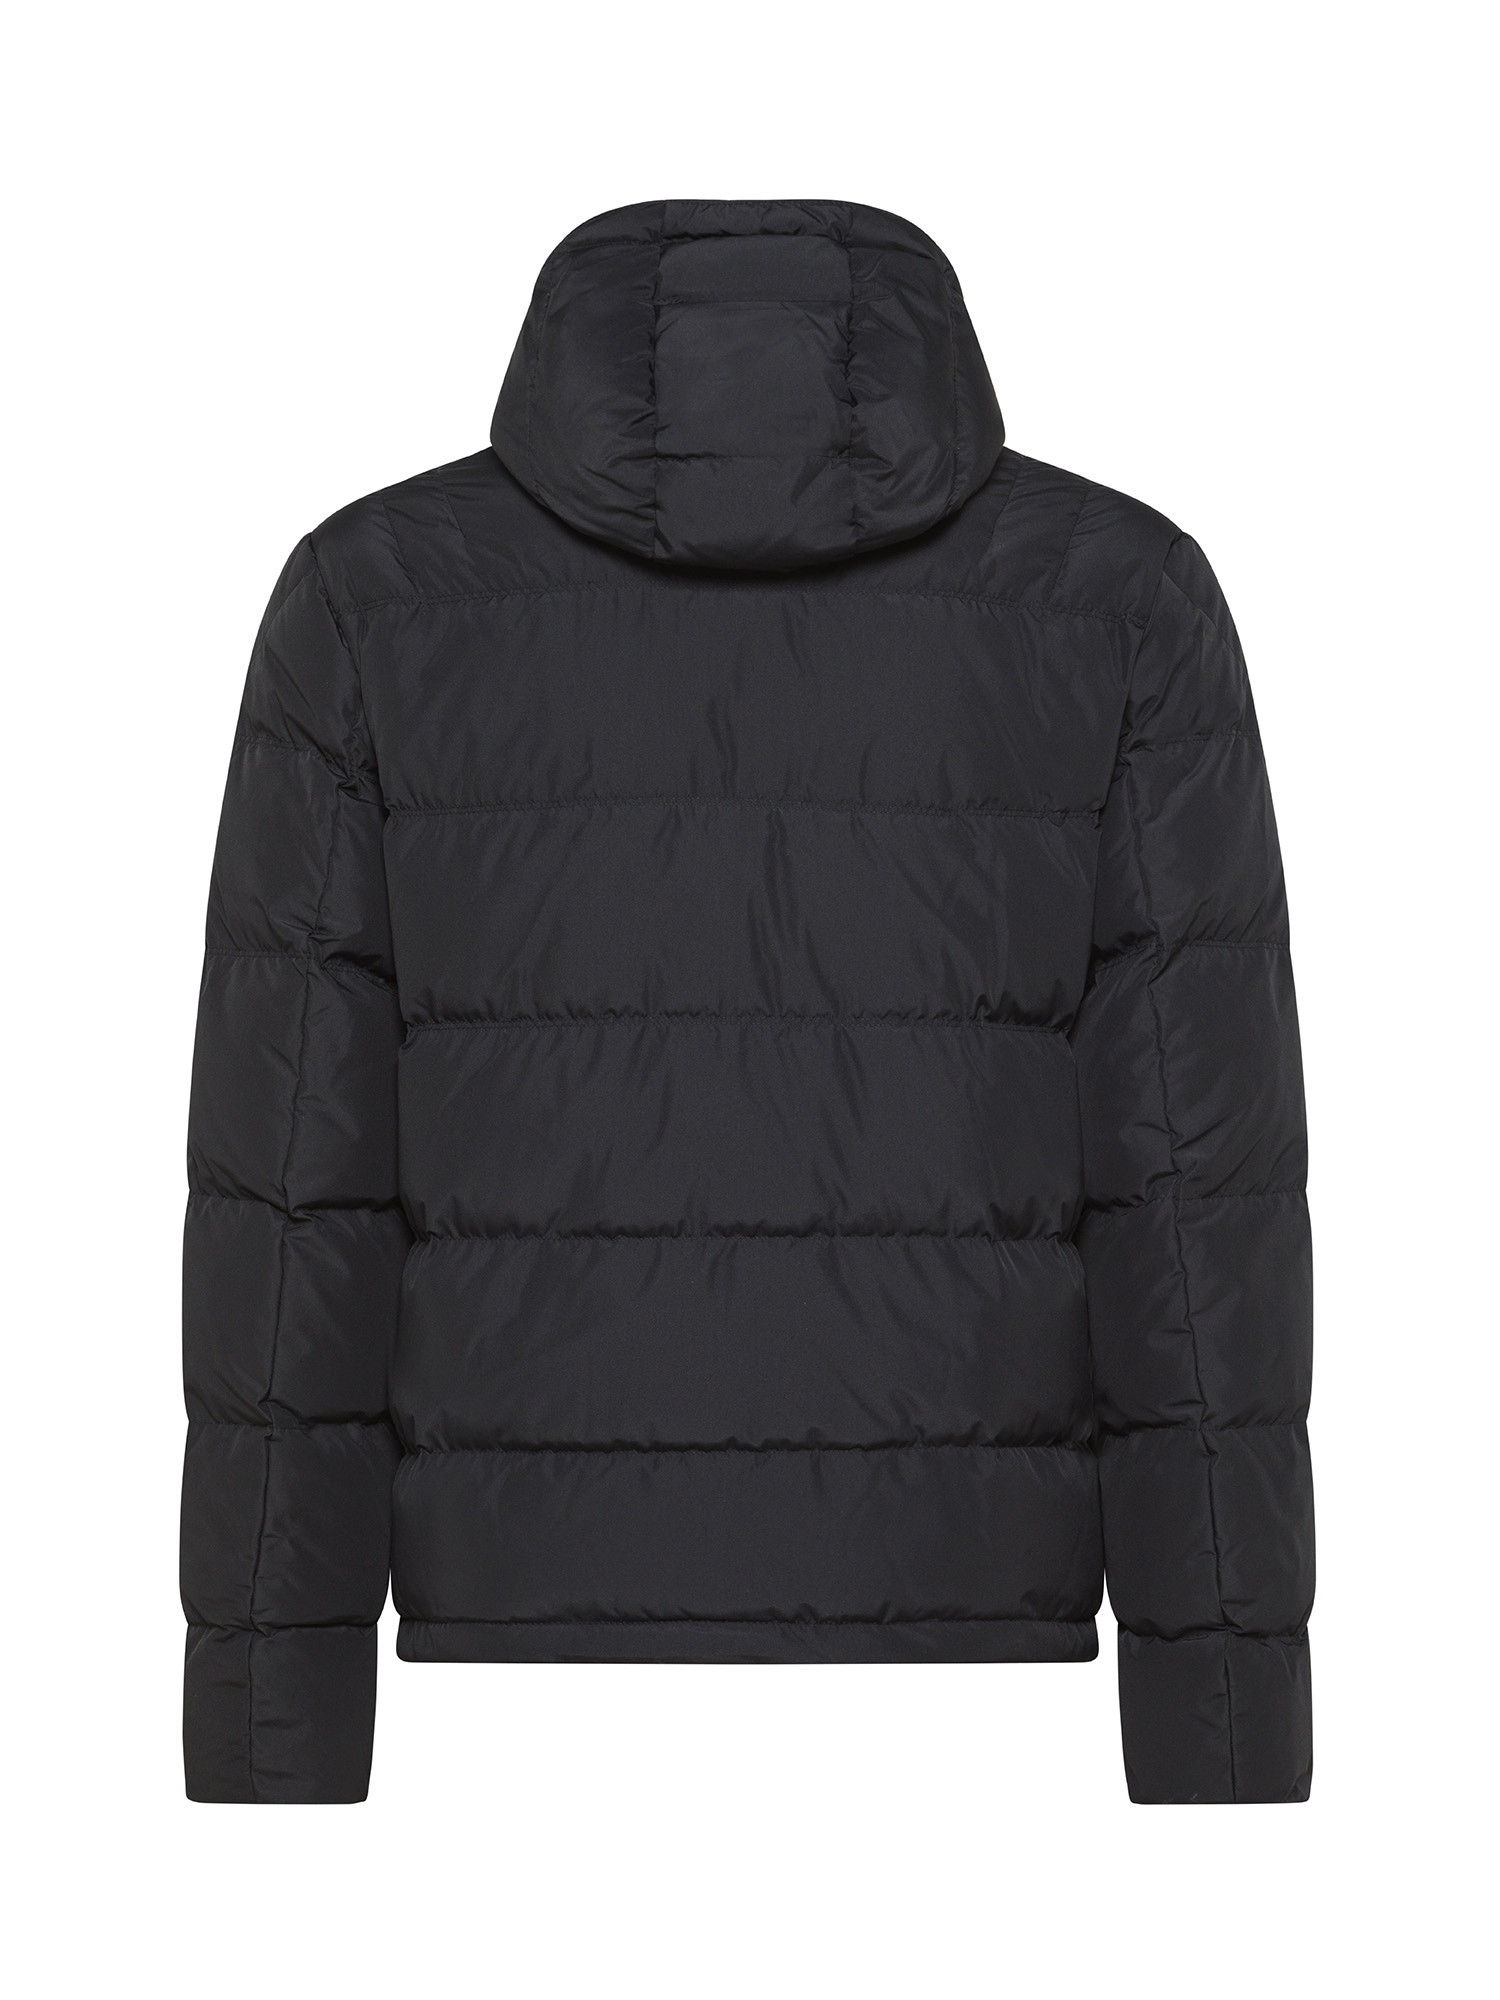 Ciesse Piumini - Down jacket with hood, Black, large image number 1